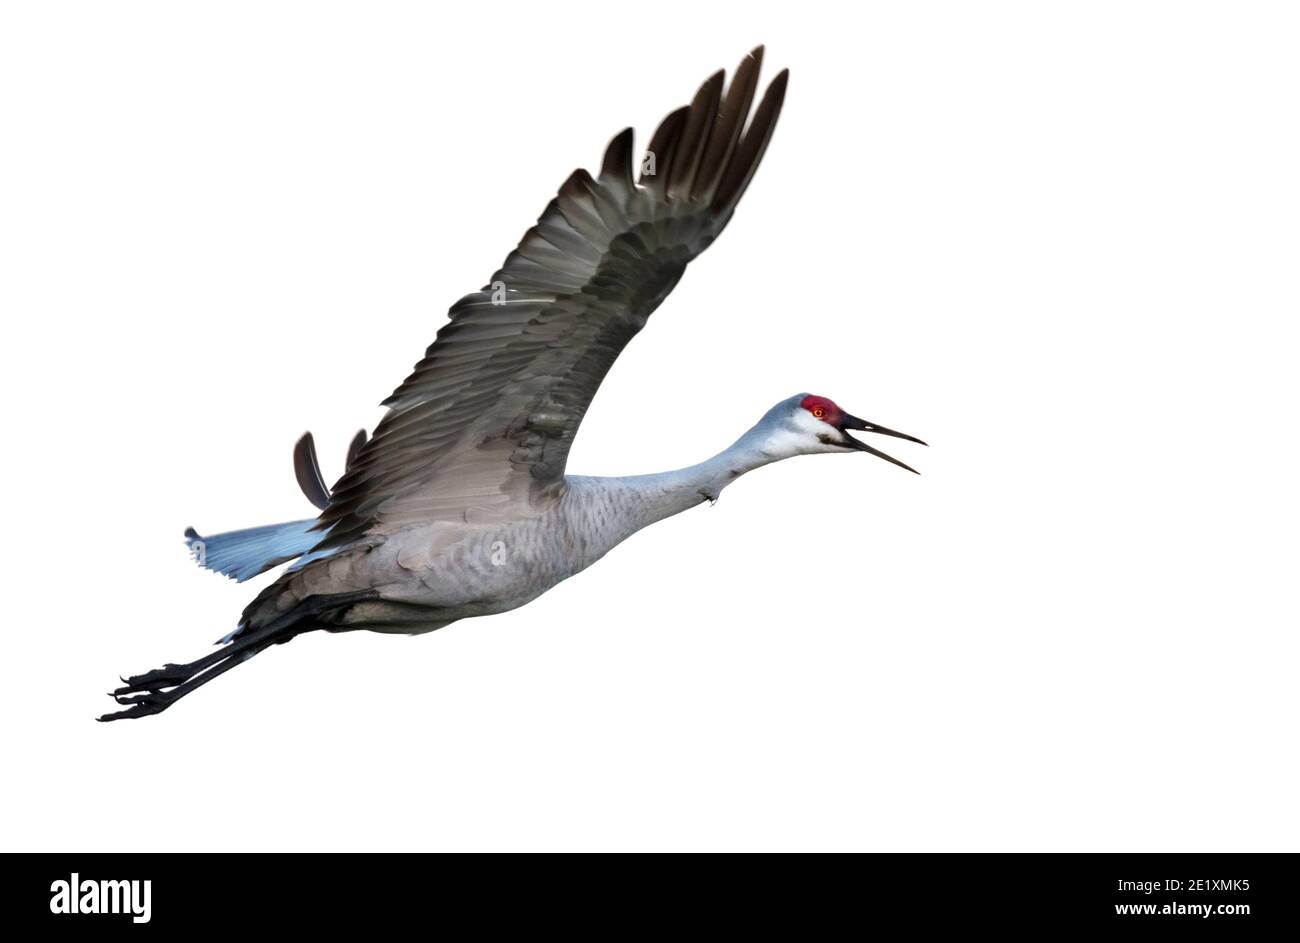 Sandhill crane (Antigone canadensis) flying, isolated on white background. Stock Photo